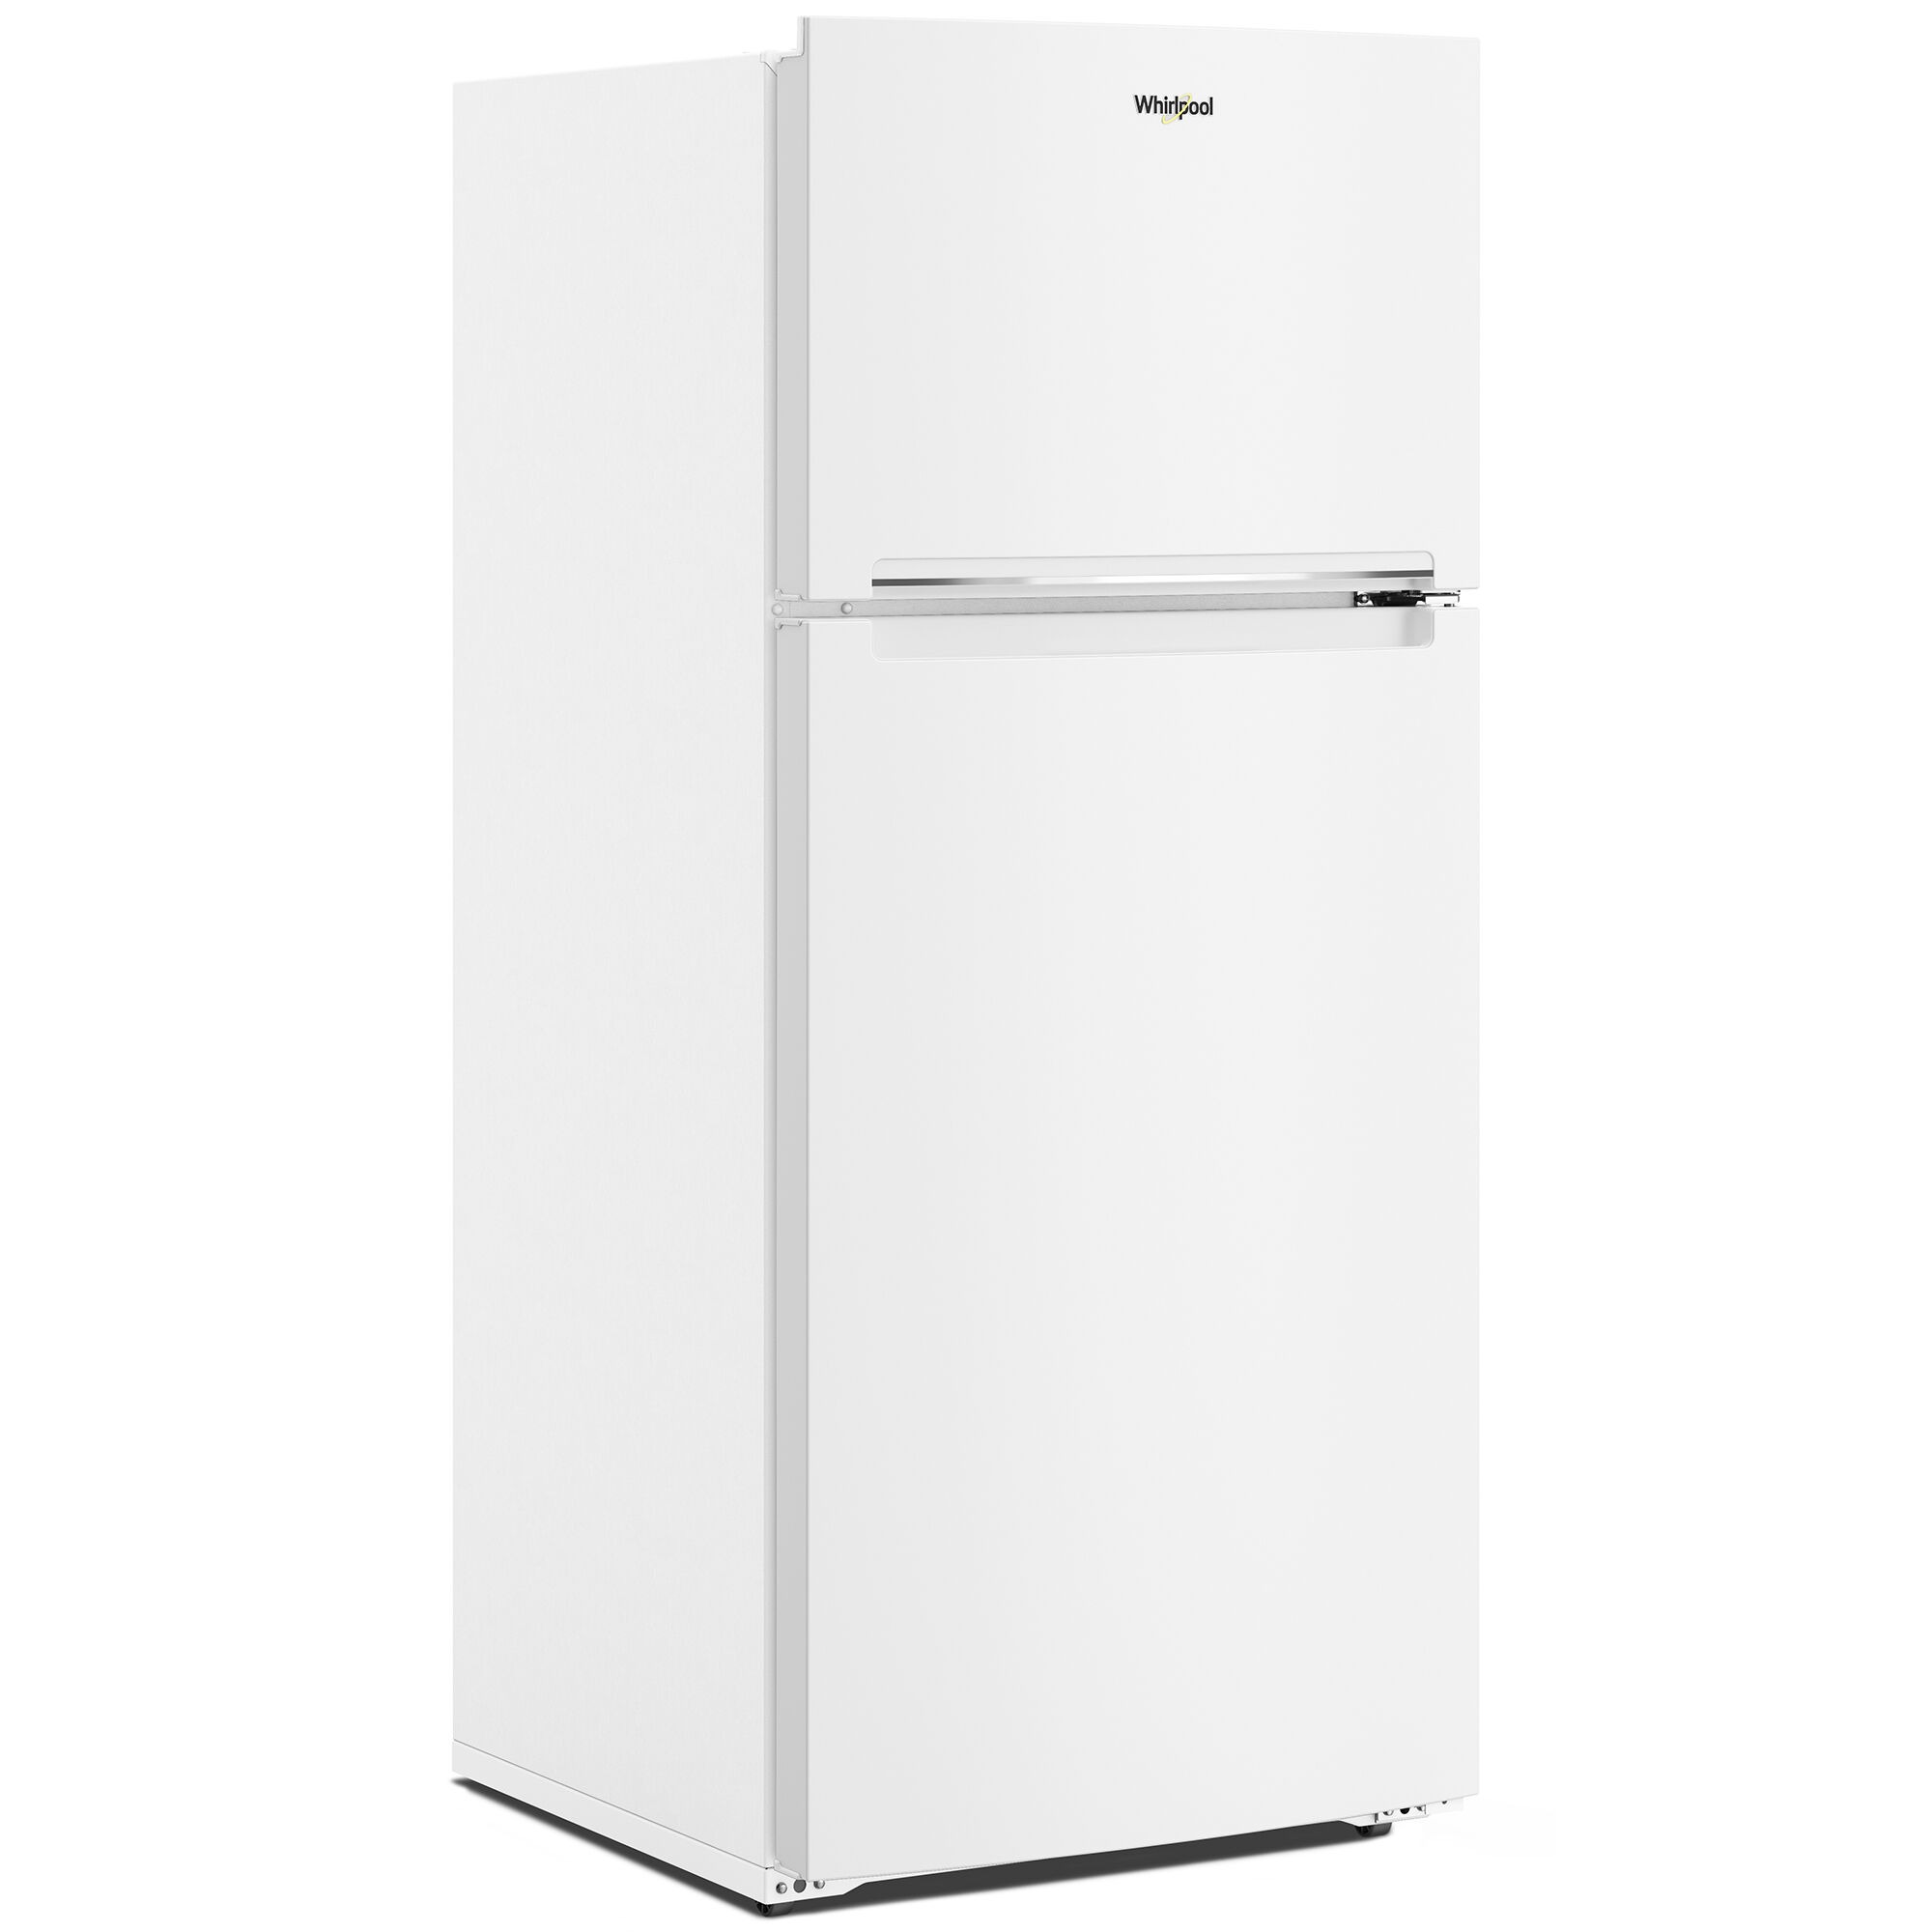 Whirlpool 28 in. 16.3 cu. ft. Top Freezer Refrigerator - White